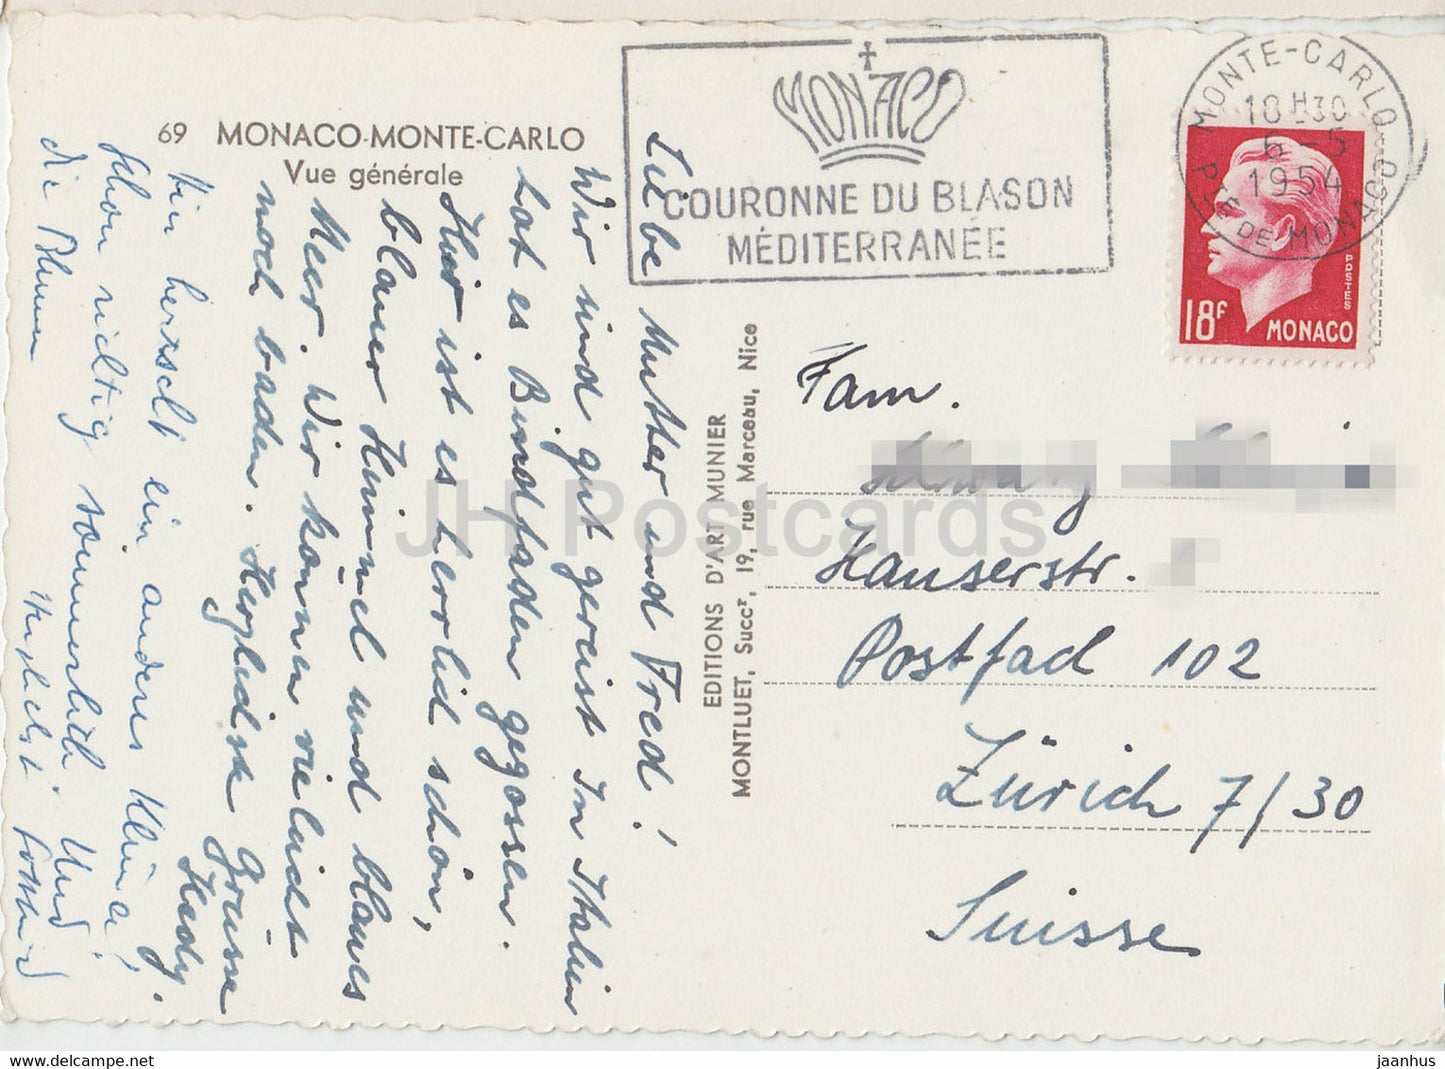 Monte Carlo - Vue generale - 69 - alte Postkarte - 1954 - Monaco - gebraucht